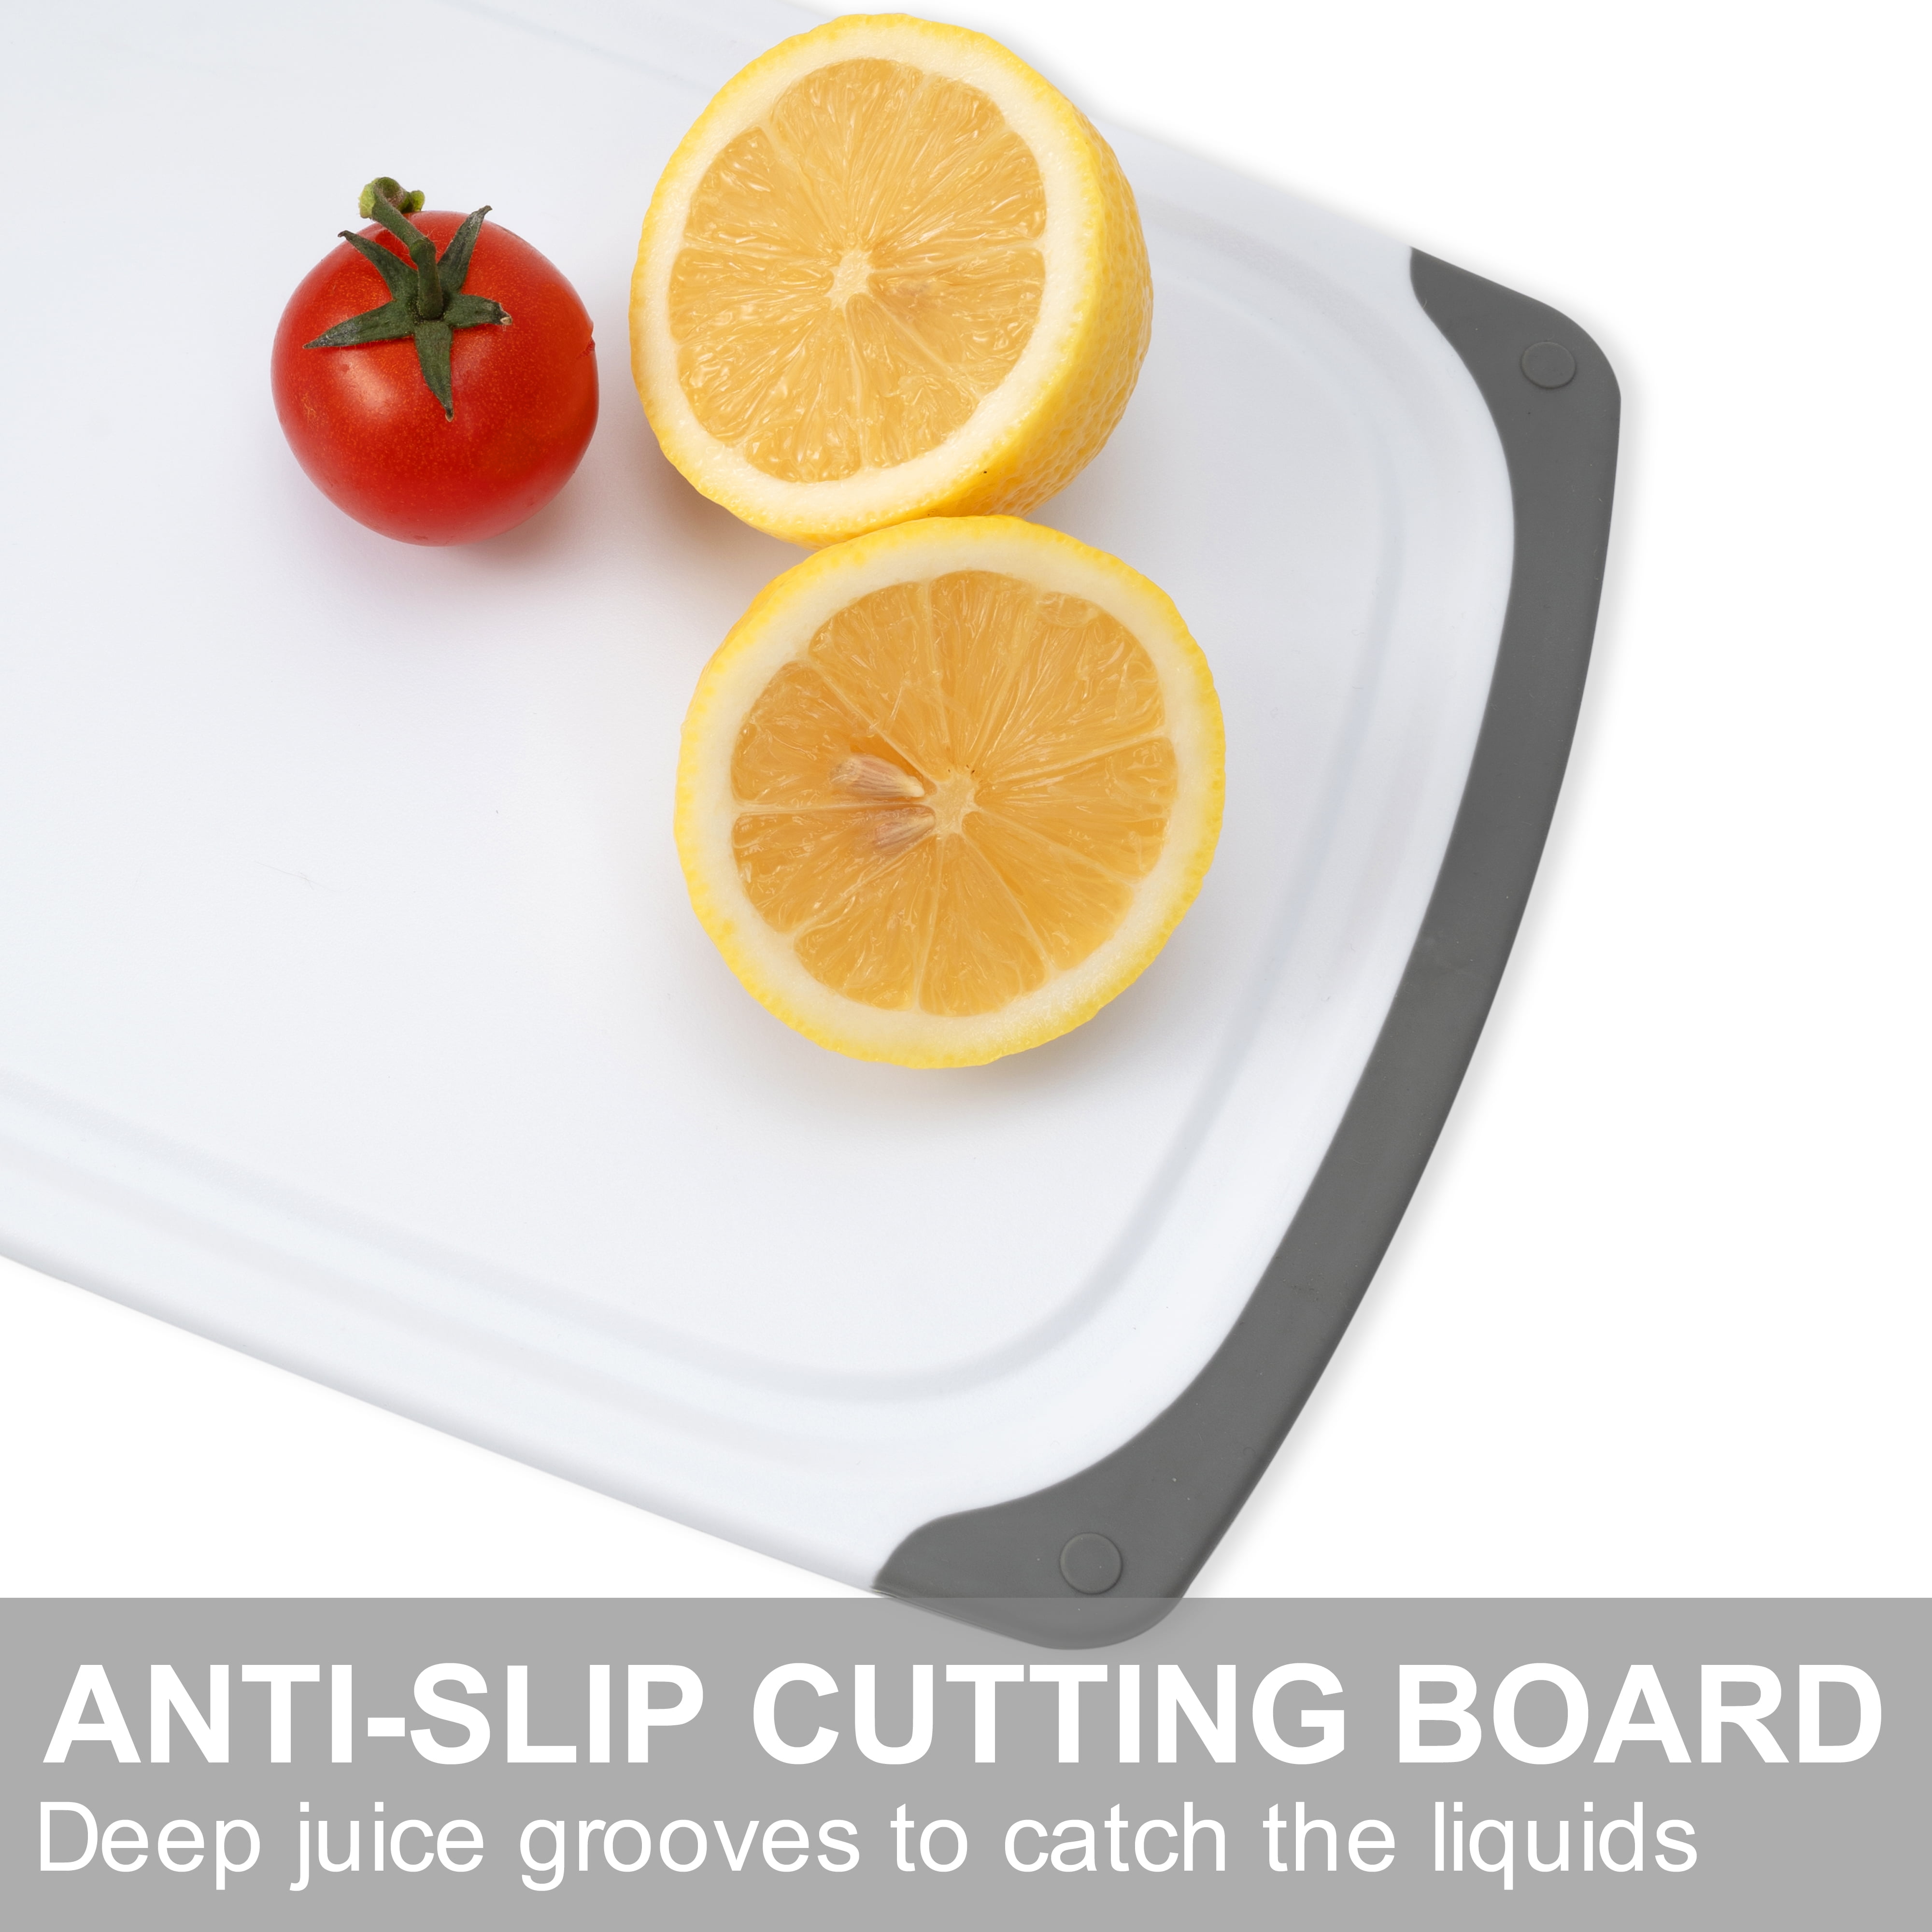 Martha Stewart Plastic Cutting Board Set - White, 2 pc - Fry's Food Stores